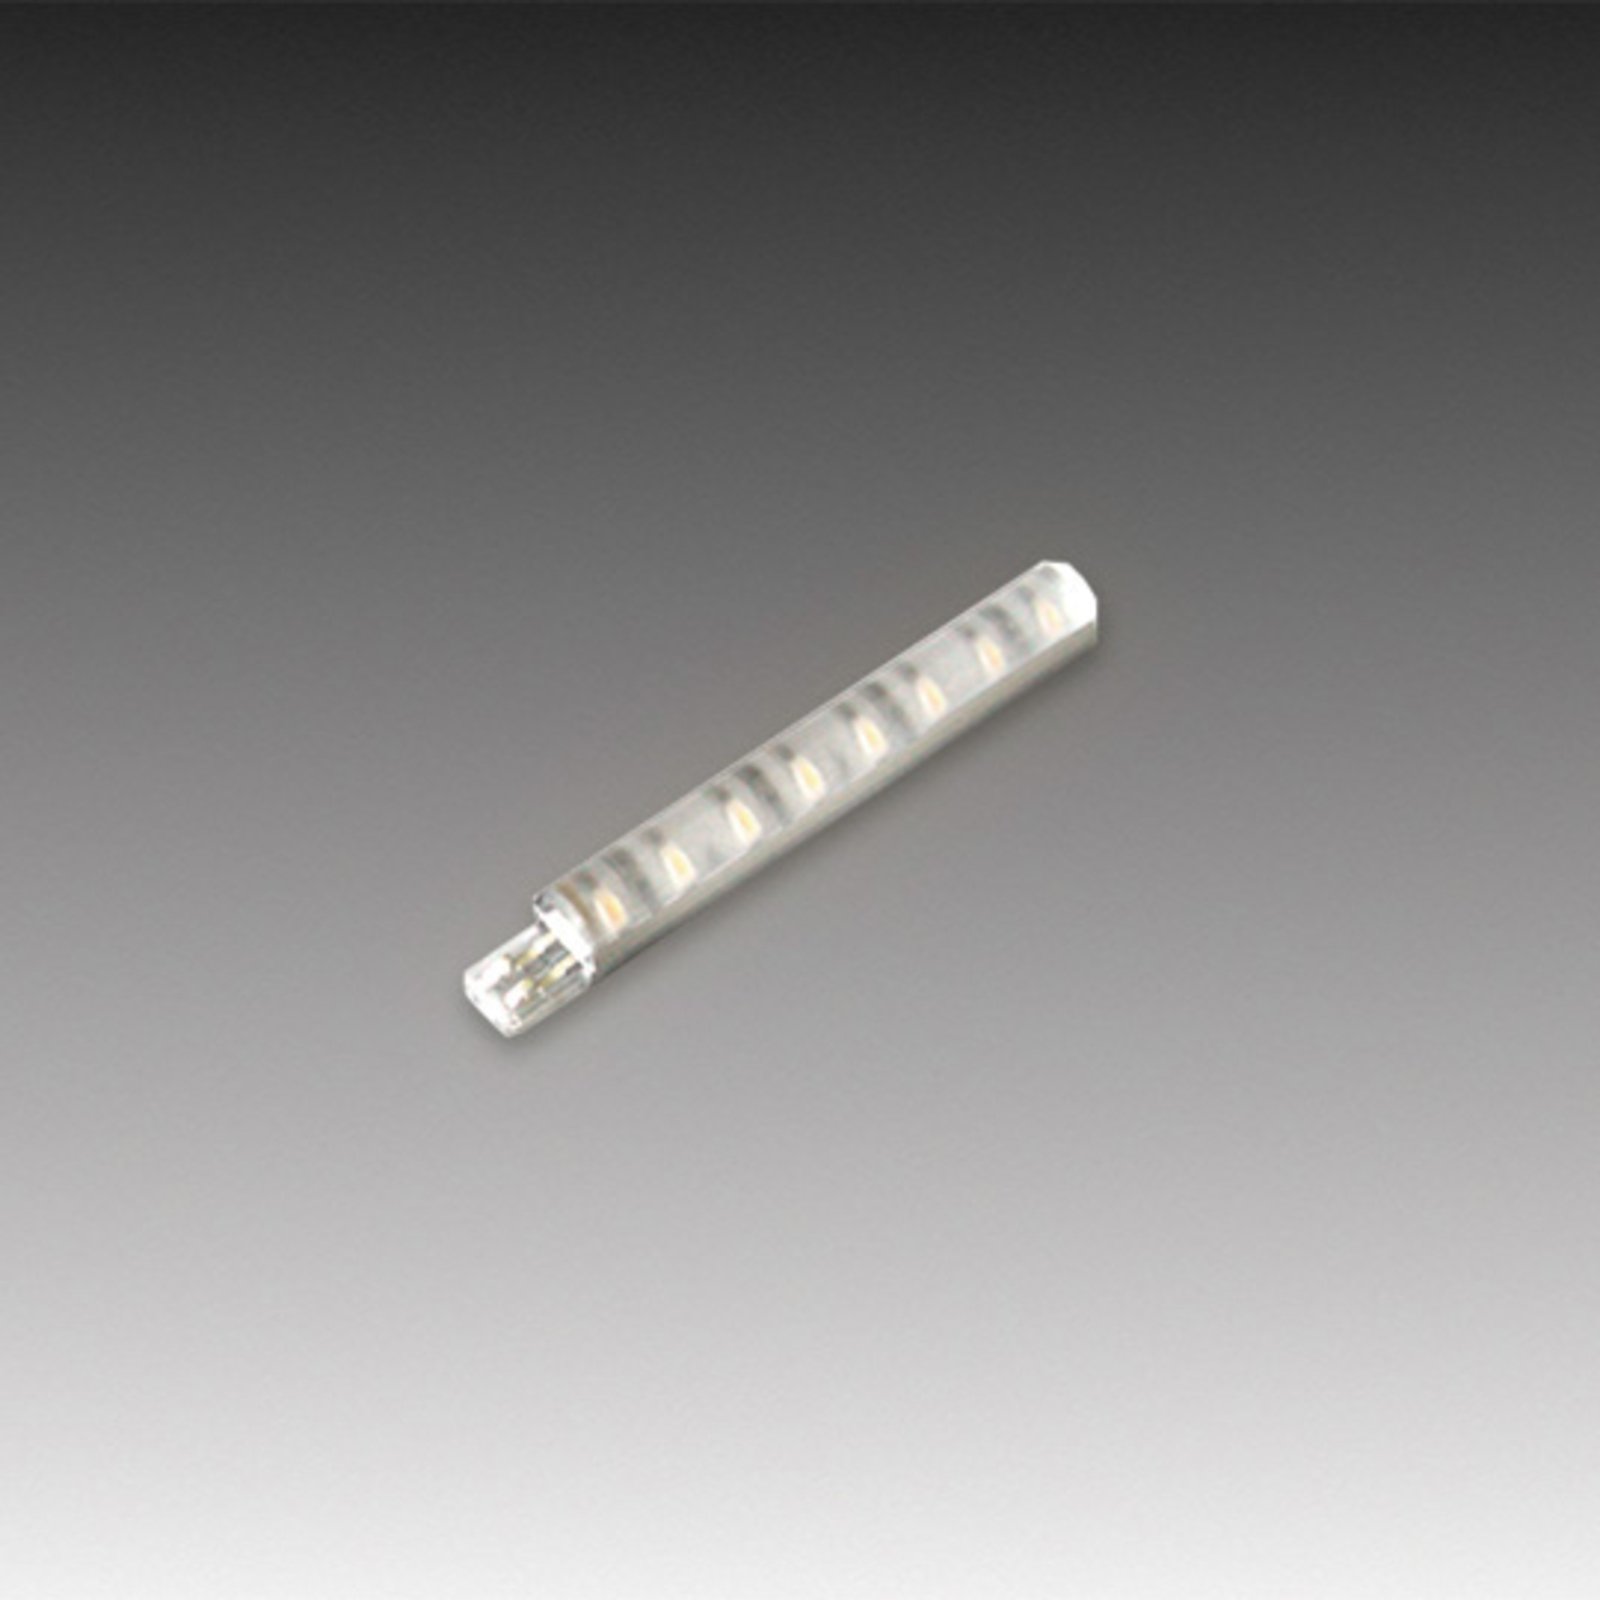 LED Stick 2 LED rod for furniture 7 cm warm white